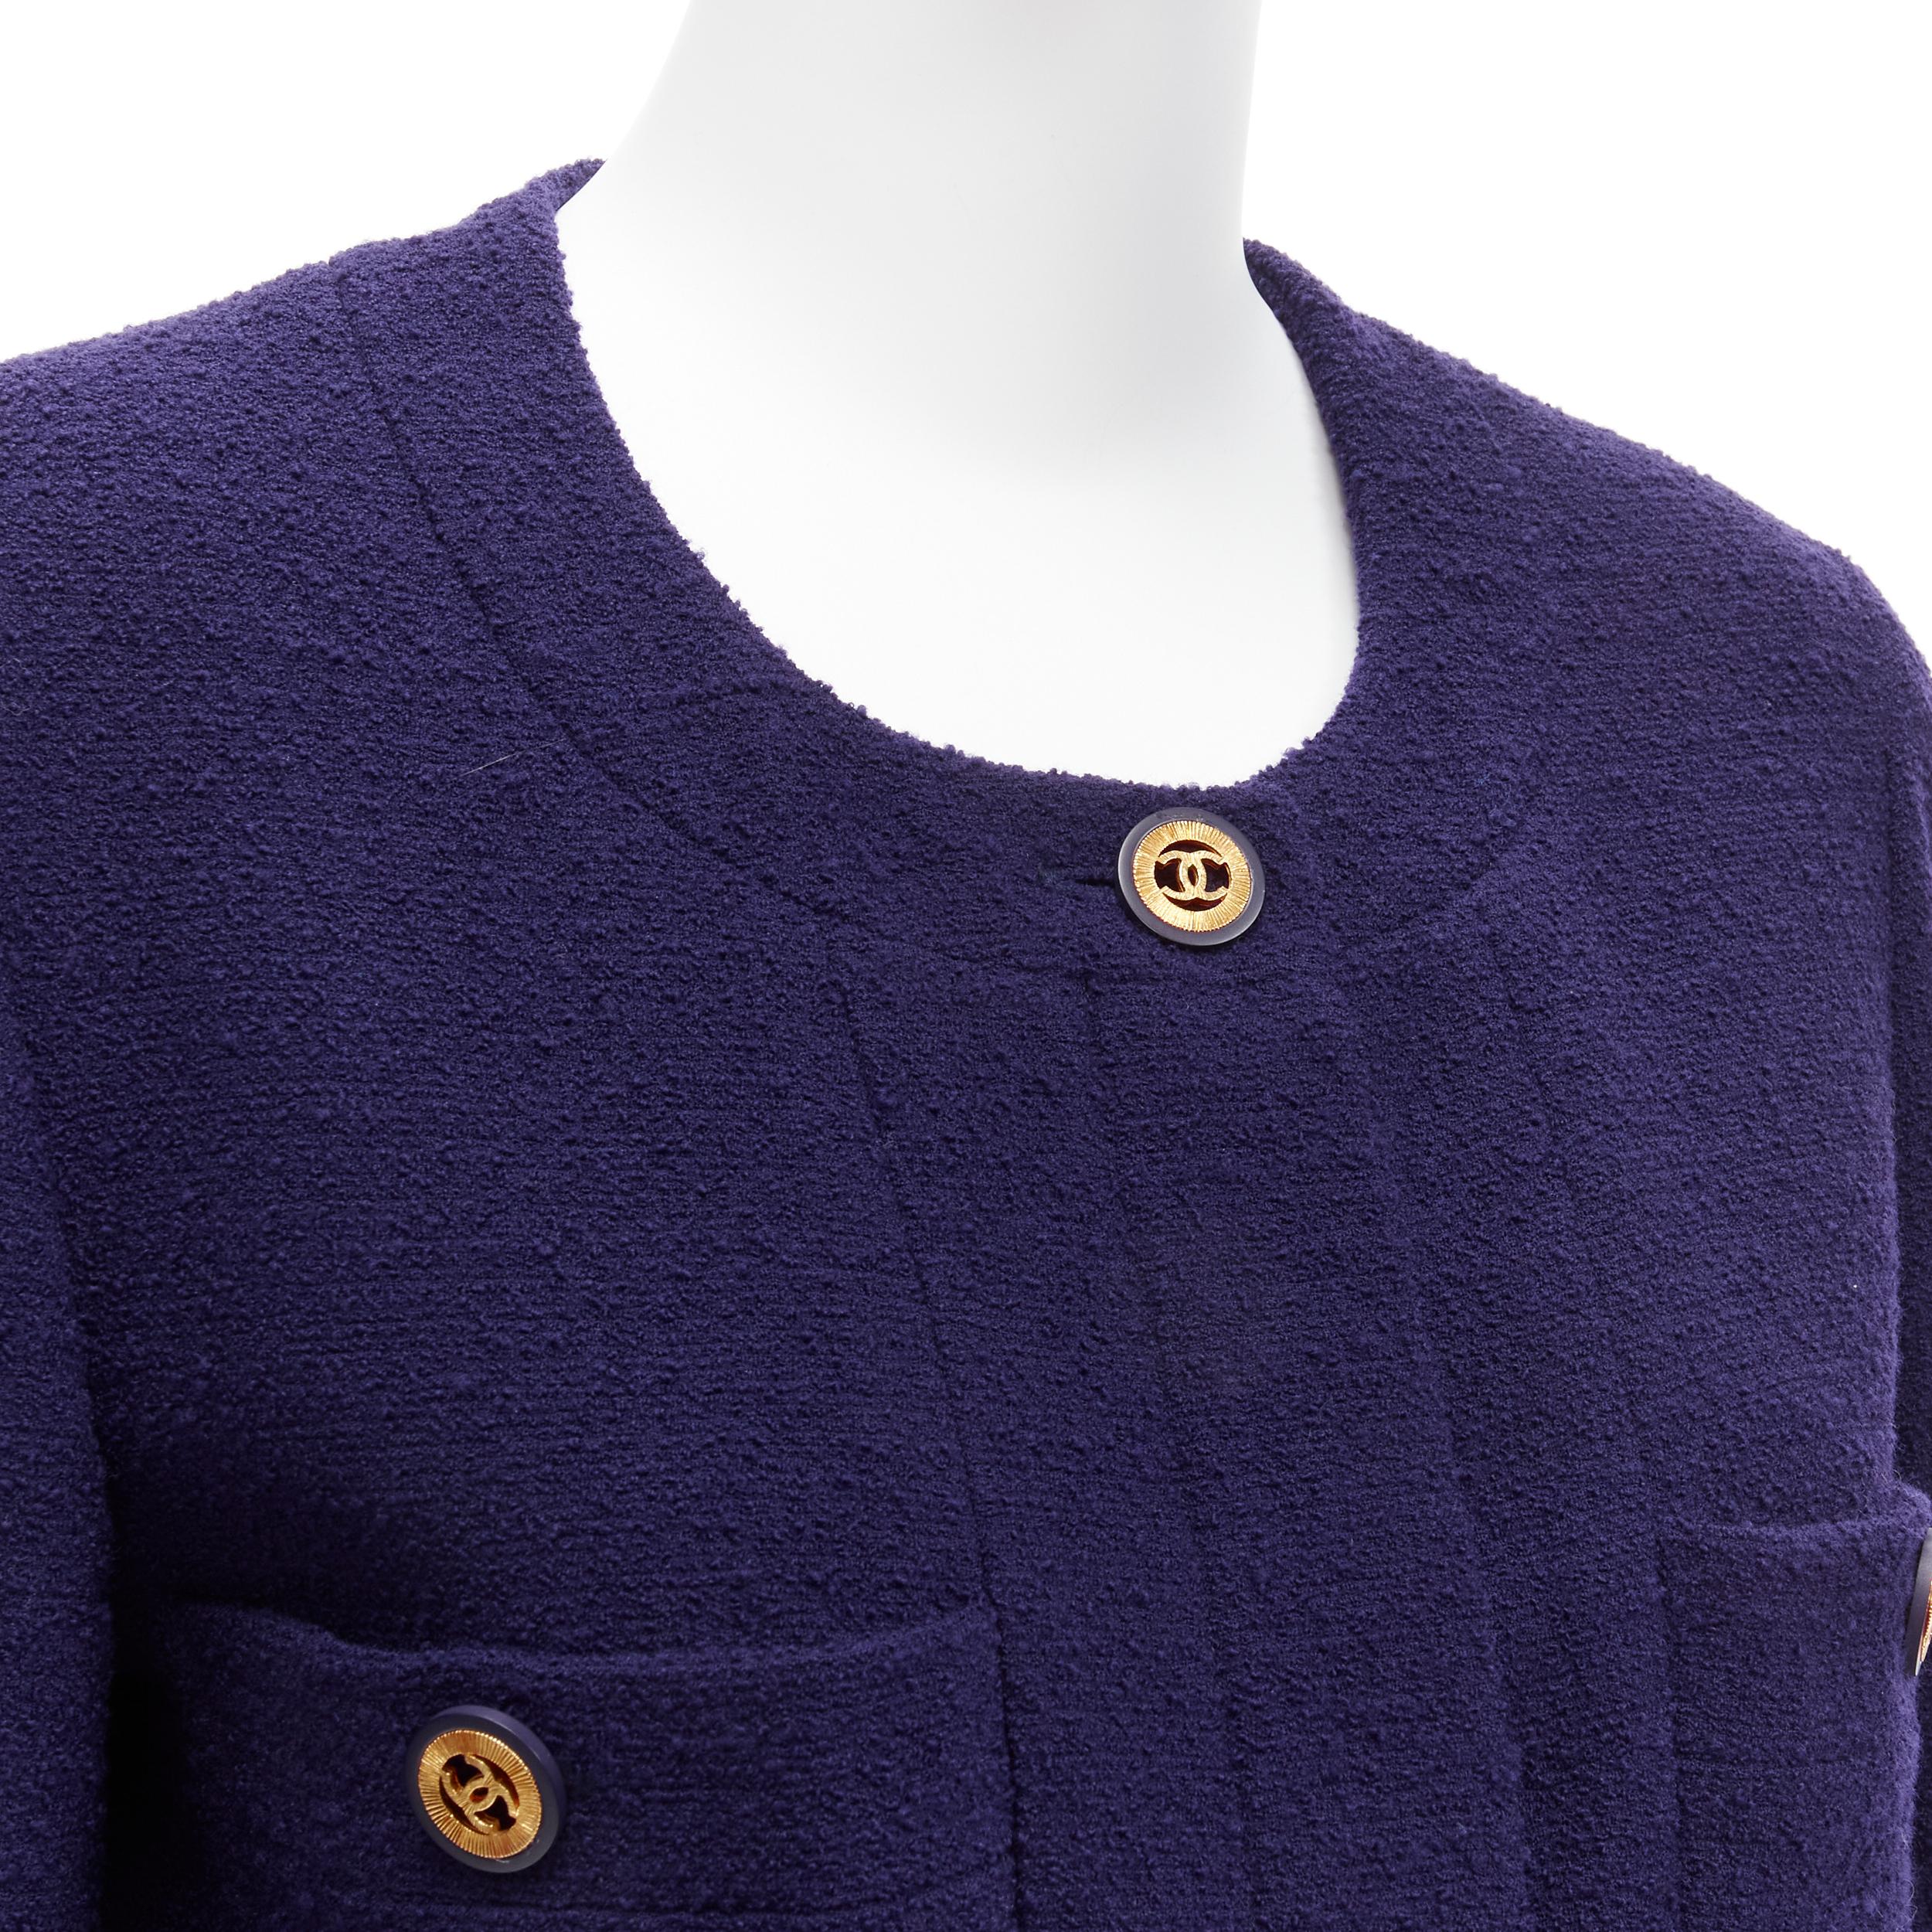 CHANEL Vintage navy blue tweed gold CC buttons 4 pocket jacket For Sale 4